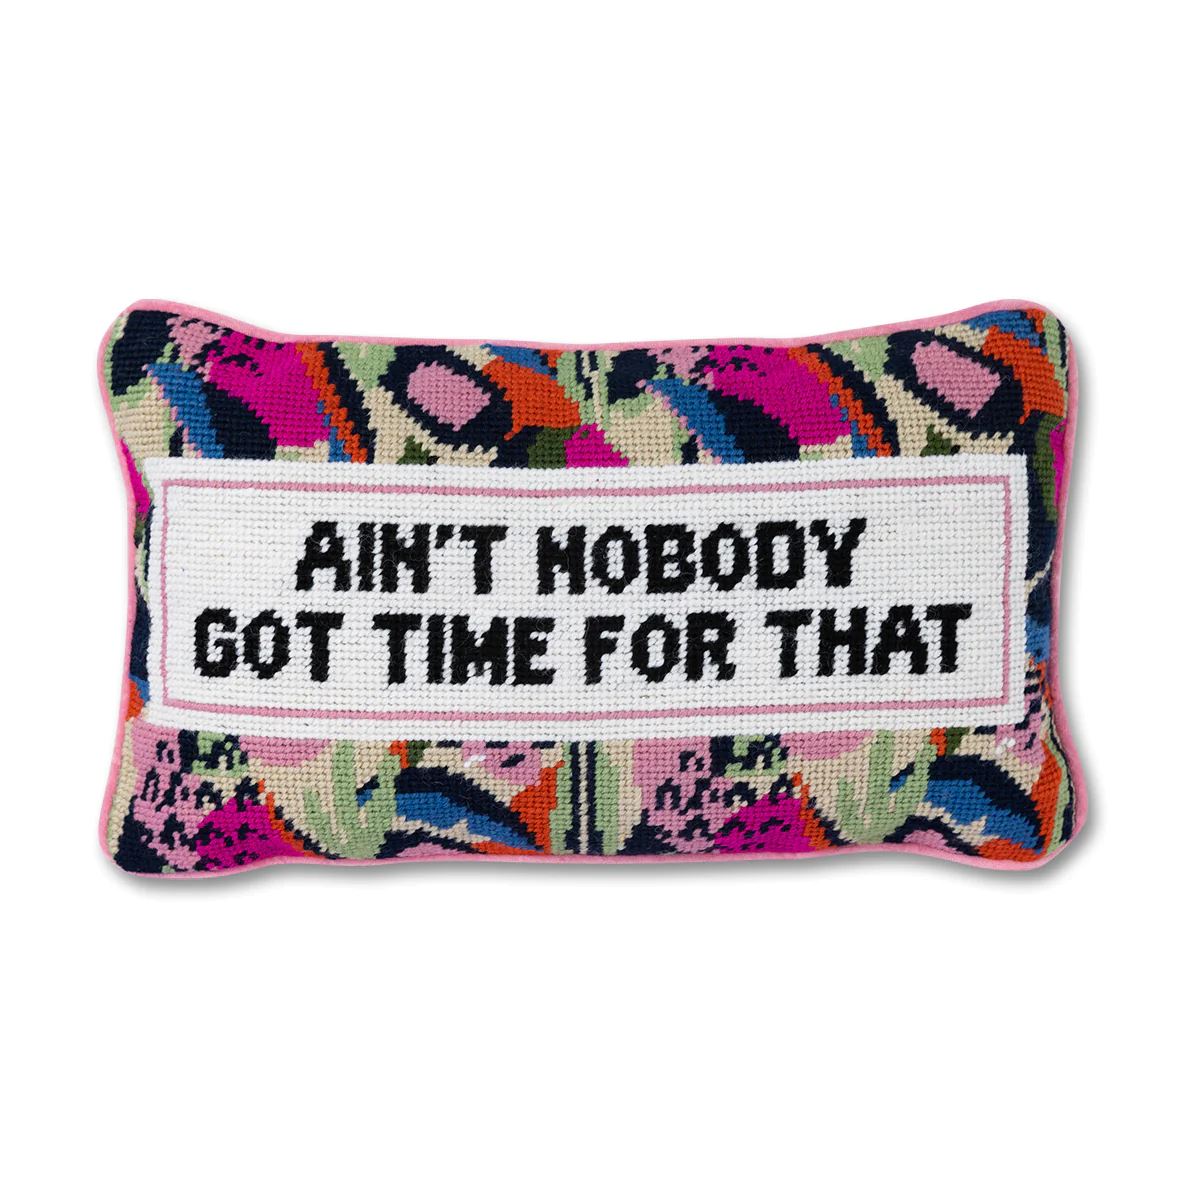 Ain't Nobody Needlepoint Pillow Pillows Furbish Pink 